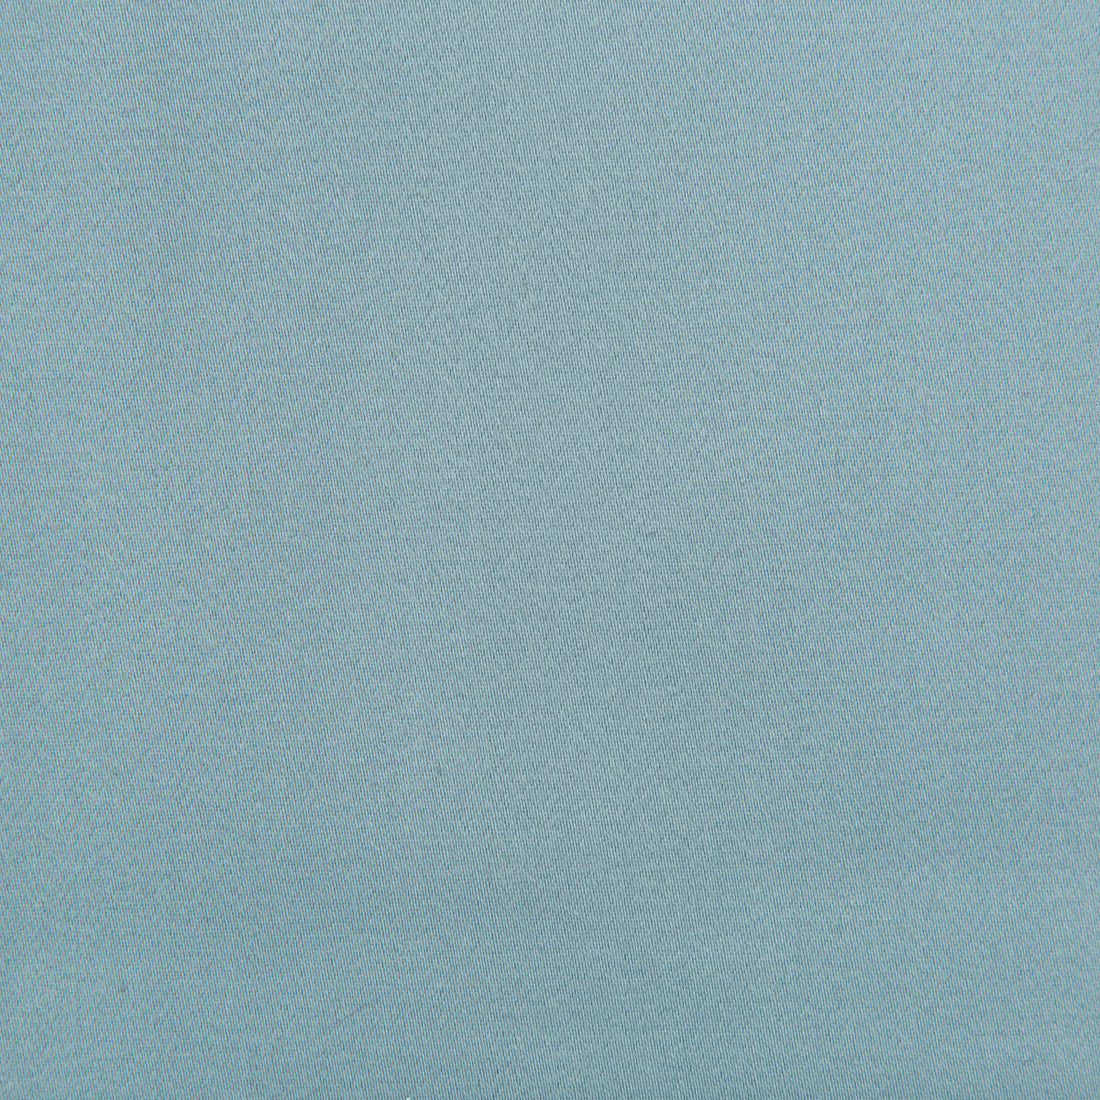 Manzanares fabric in azul color - pattern LCT5480.004.0 - by Gaston y Daniela in the Lorenzo Castillo IV collection